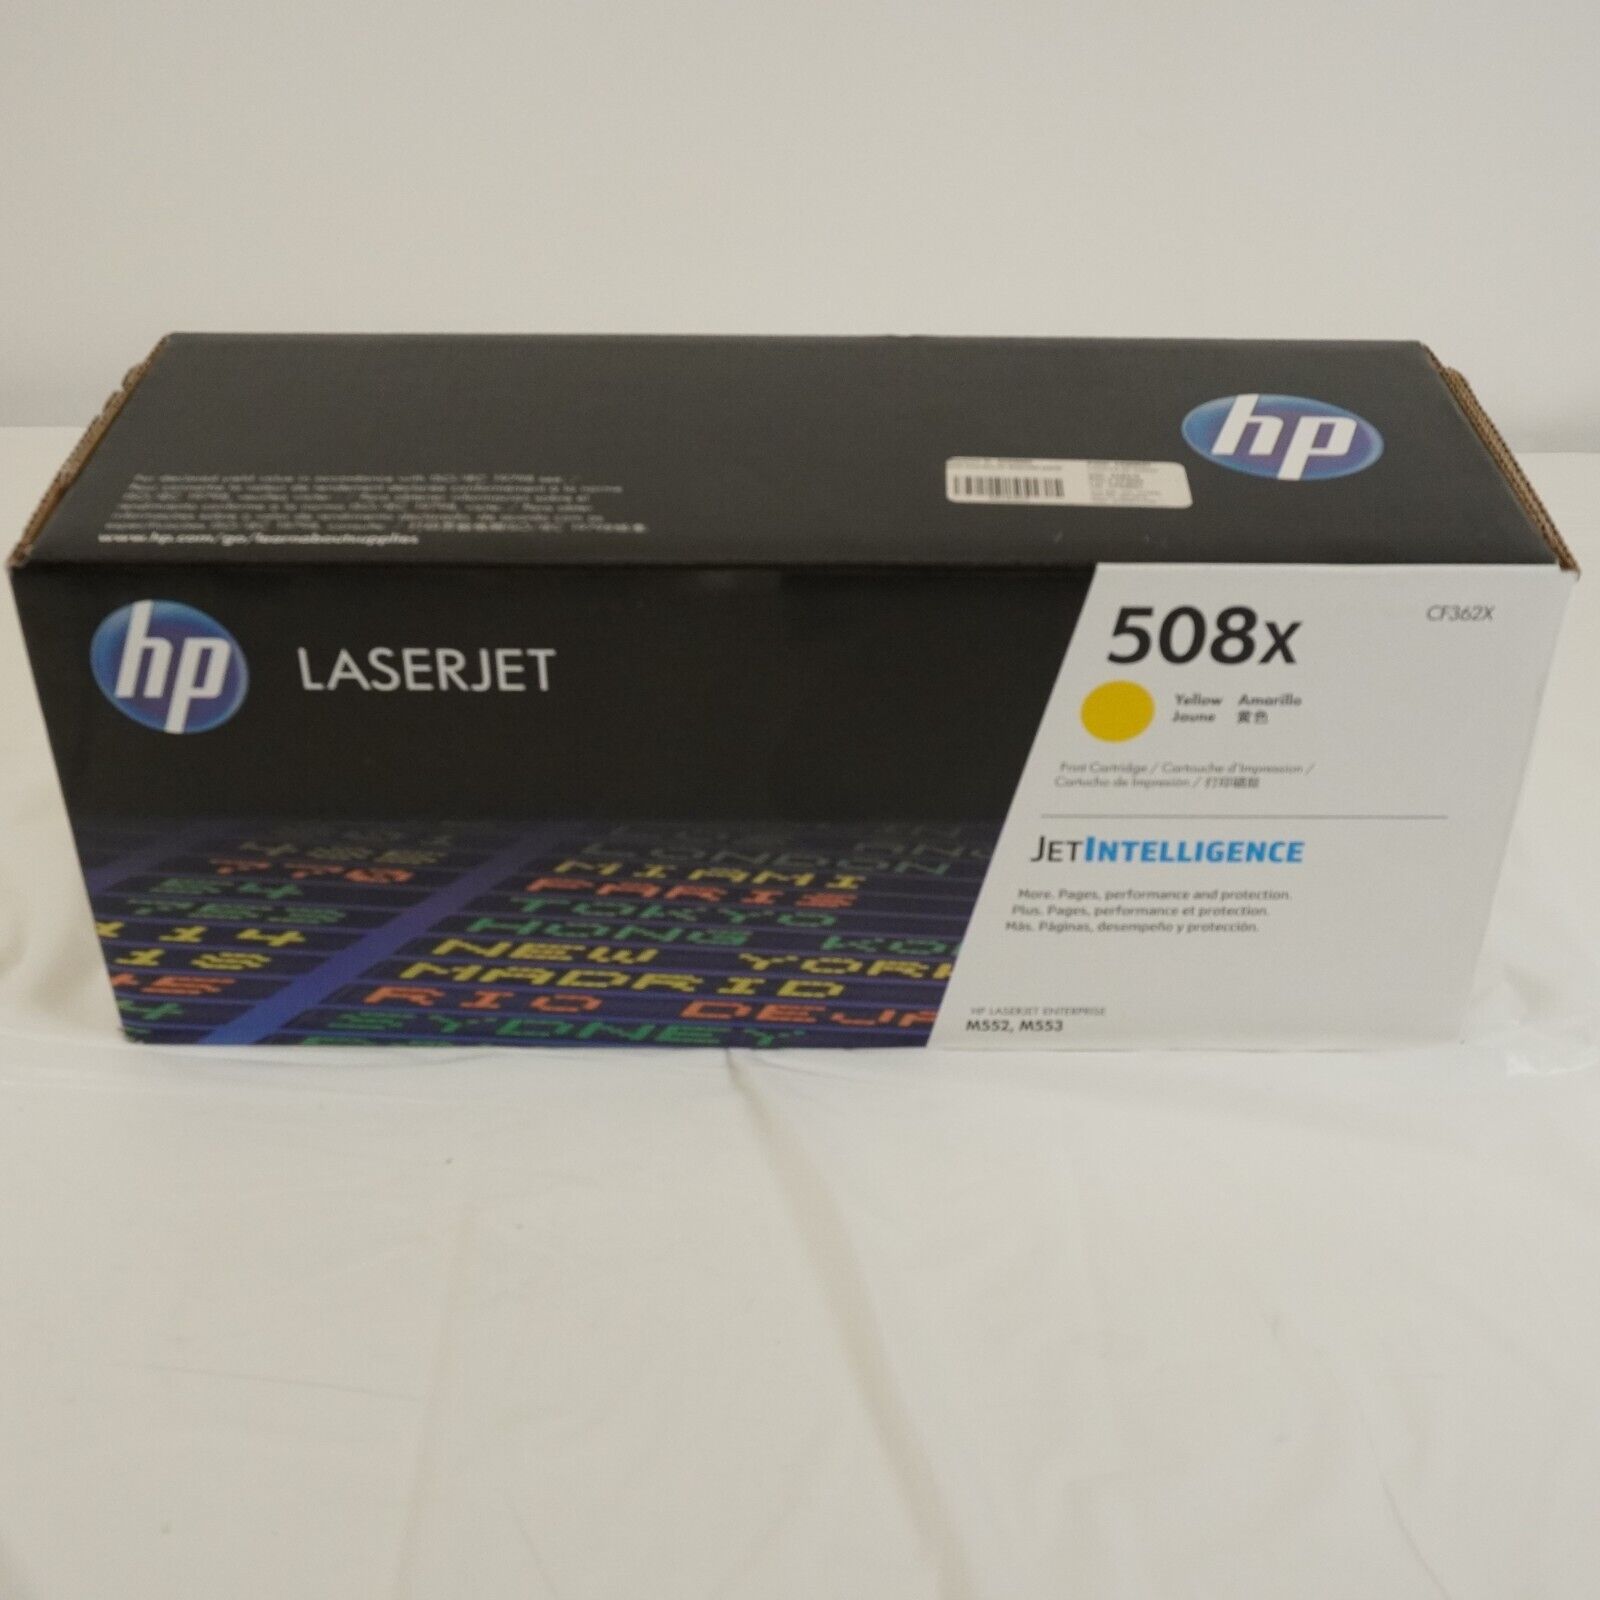 HP LaserJet CF362X High Yield Yellow Toner 508X - NEW IN BOX